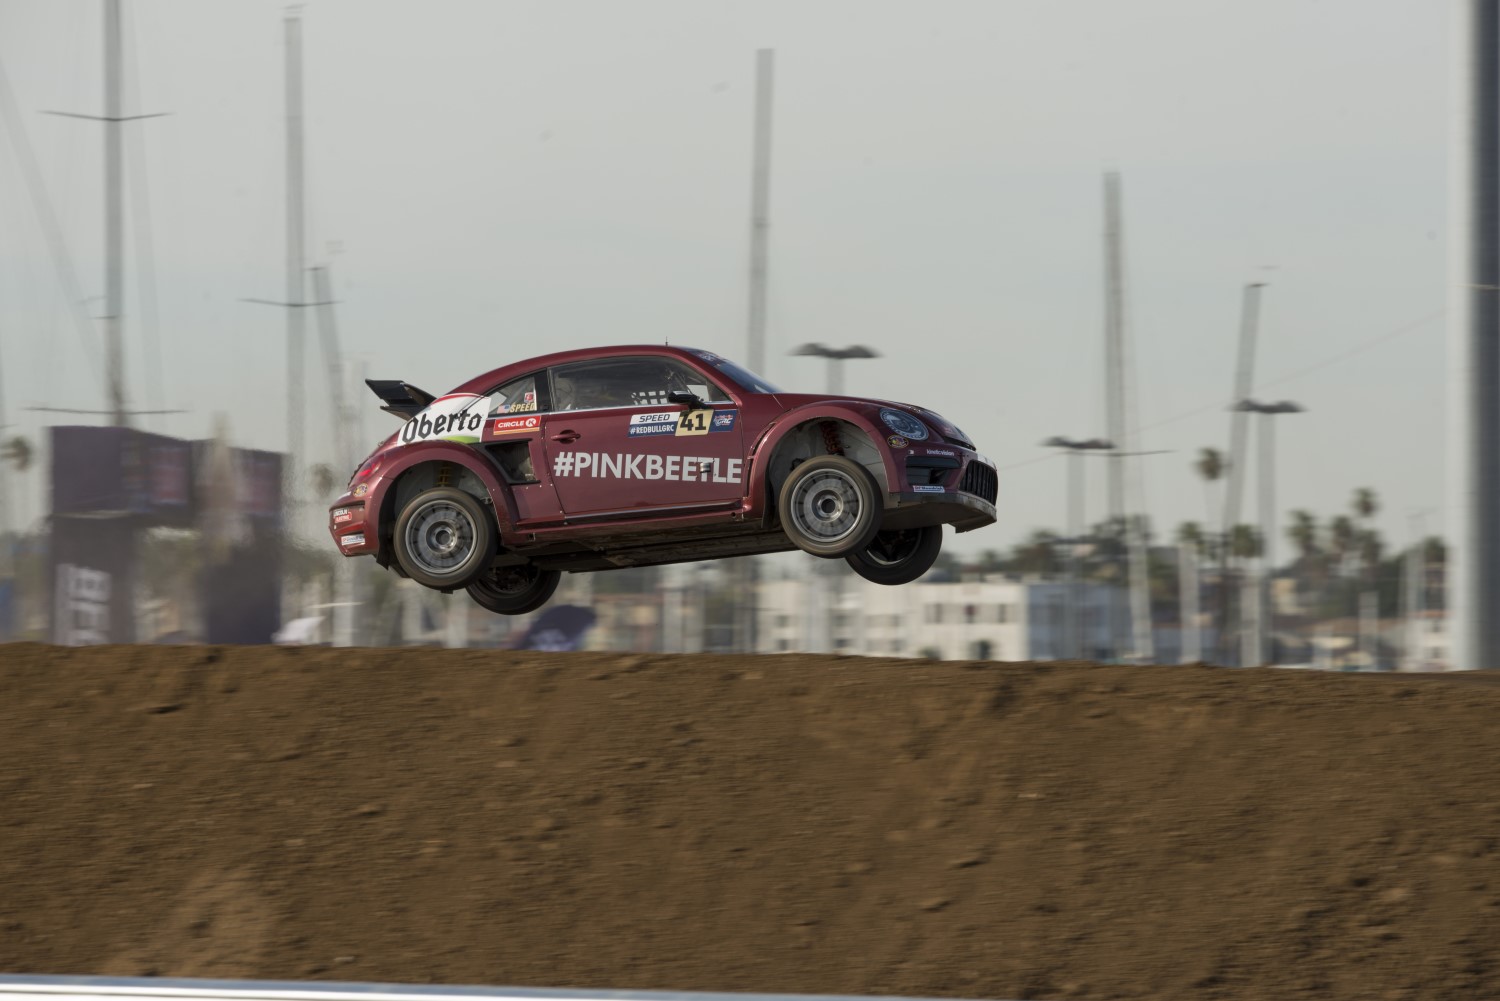 Scott Speed flies through the air